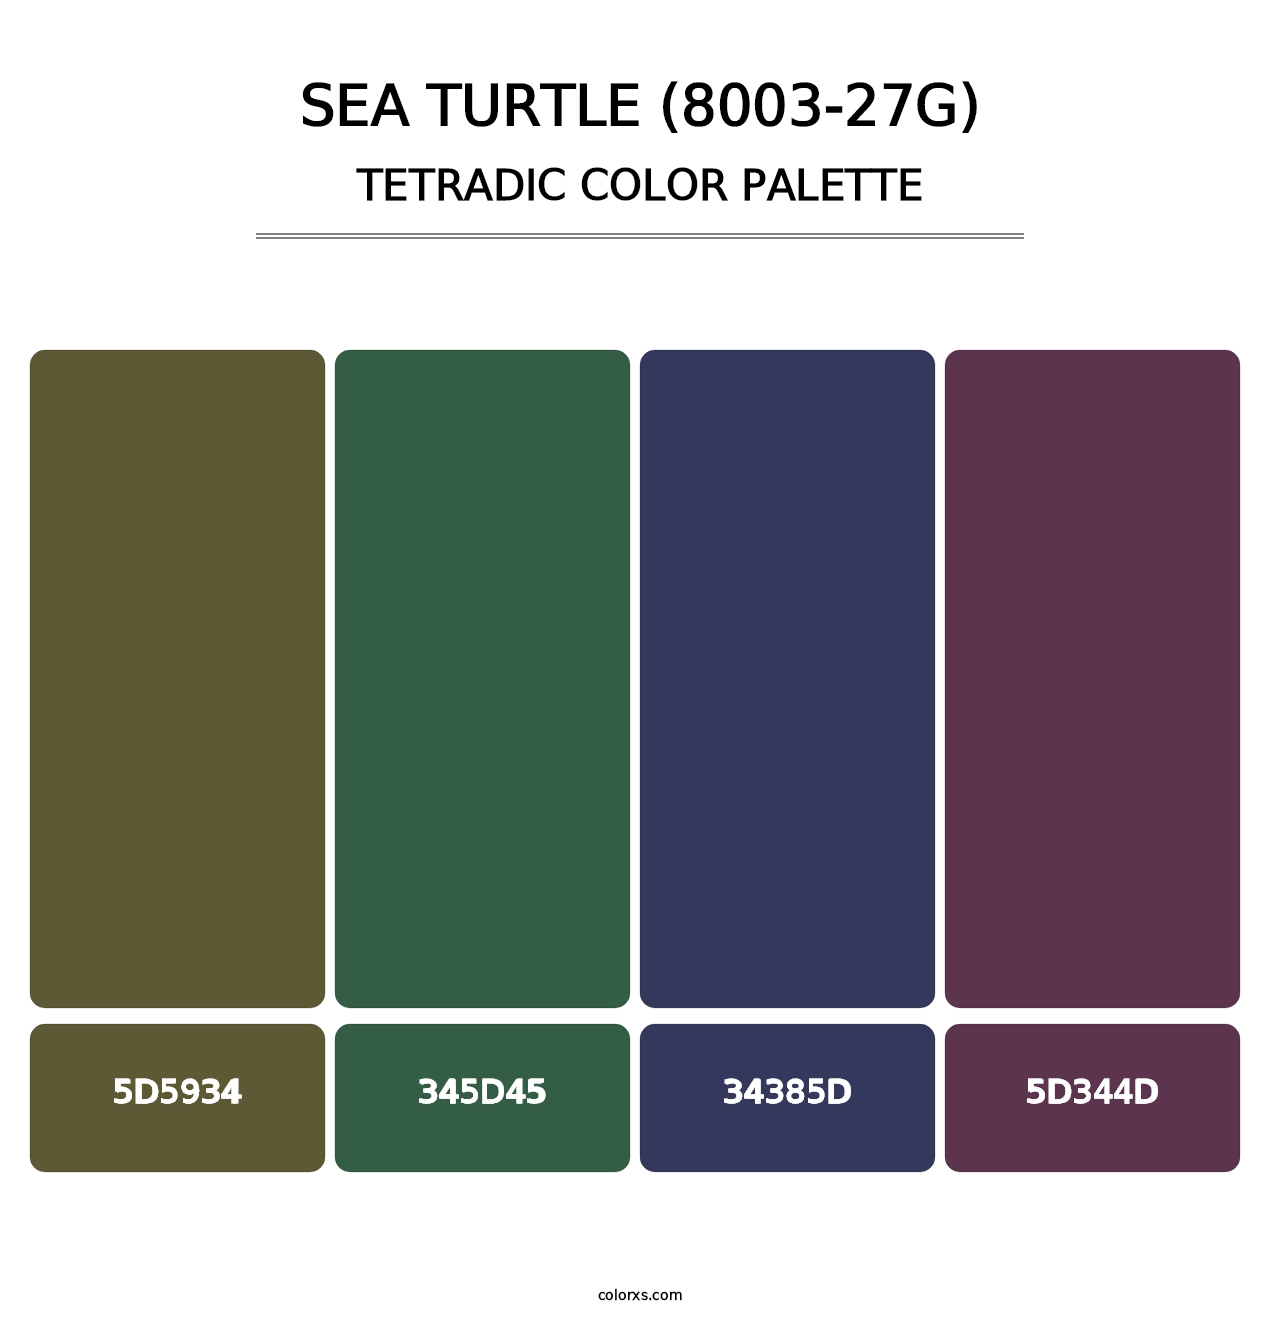 Sea Turtle (8003-27G) - Tetradic Color Palette